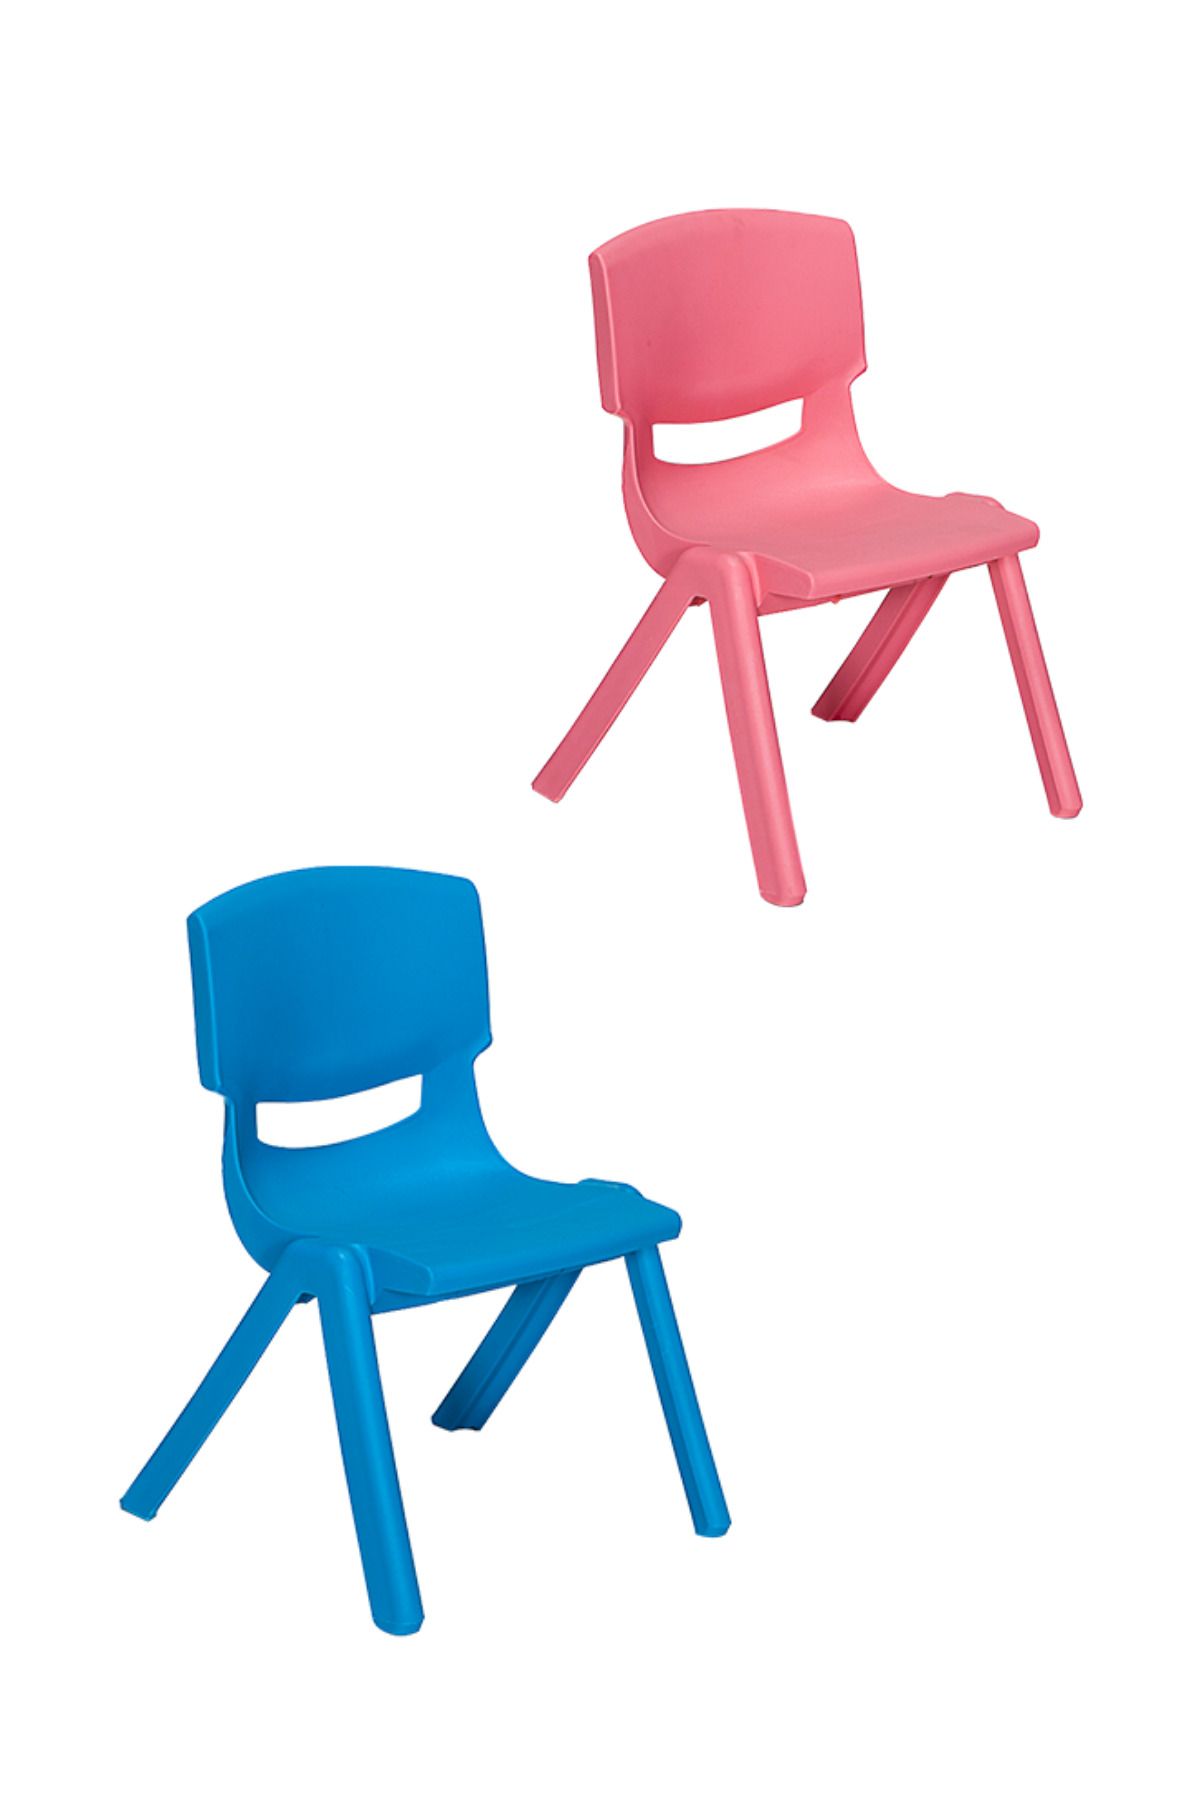 MOBETTO 2 Adet Kreş Anaokulu Çocuk Sandalyesi Sert Plastik- Mavi/Pembe